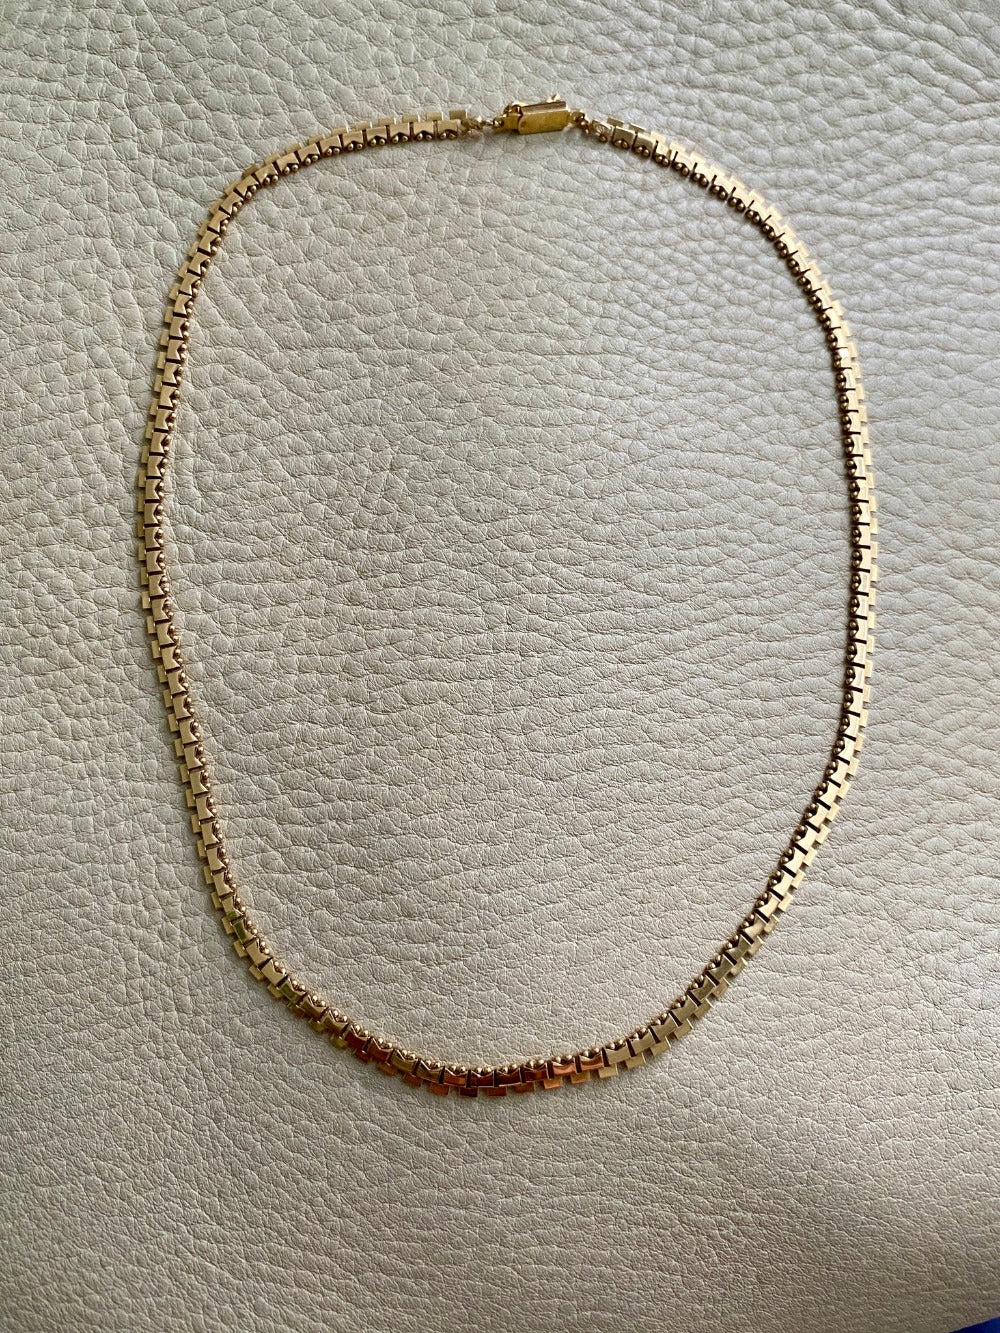 18k yellow gold vintage italian fringe link necklace 17 inch length